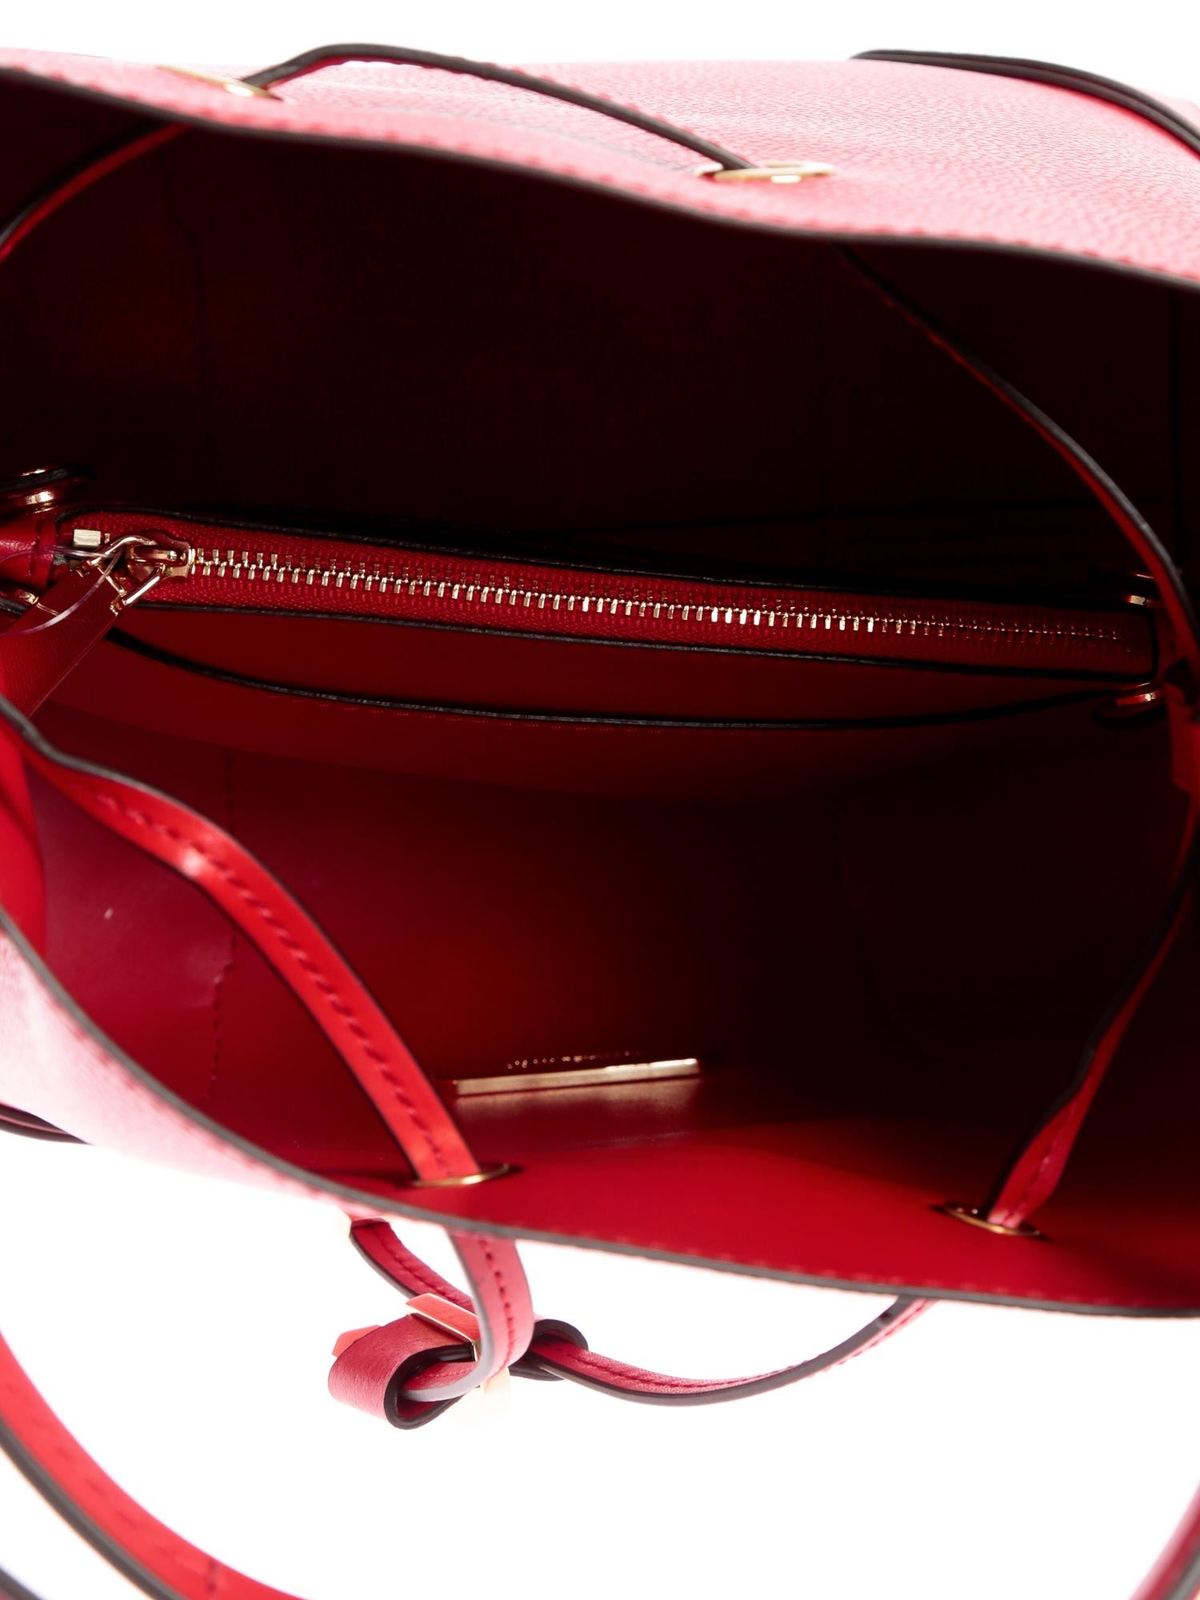 Michael Kors Women's Shoulder Bags - Red